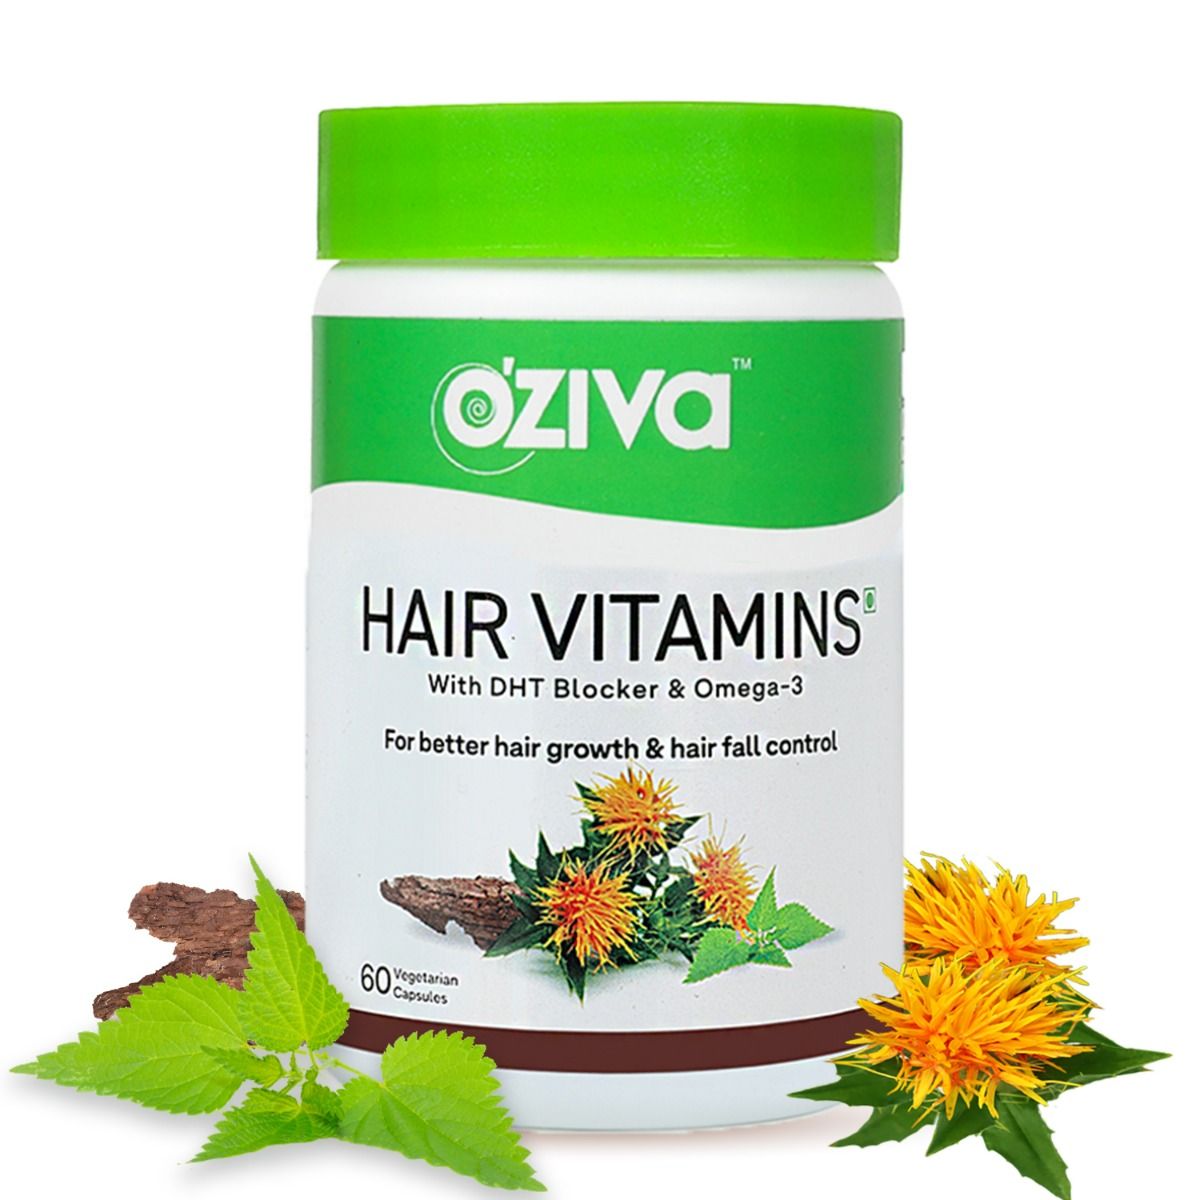 Buy OZiva Hair Vitamins, 60 Capsules Online